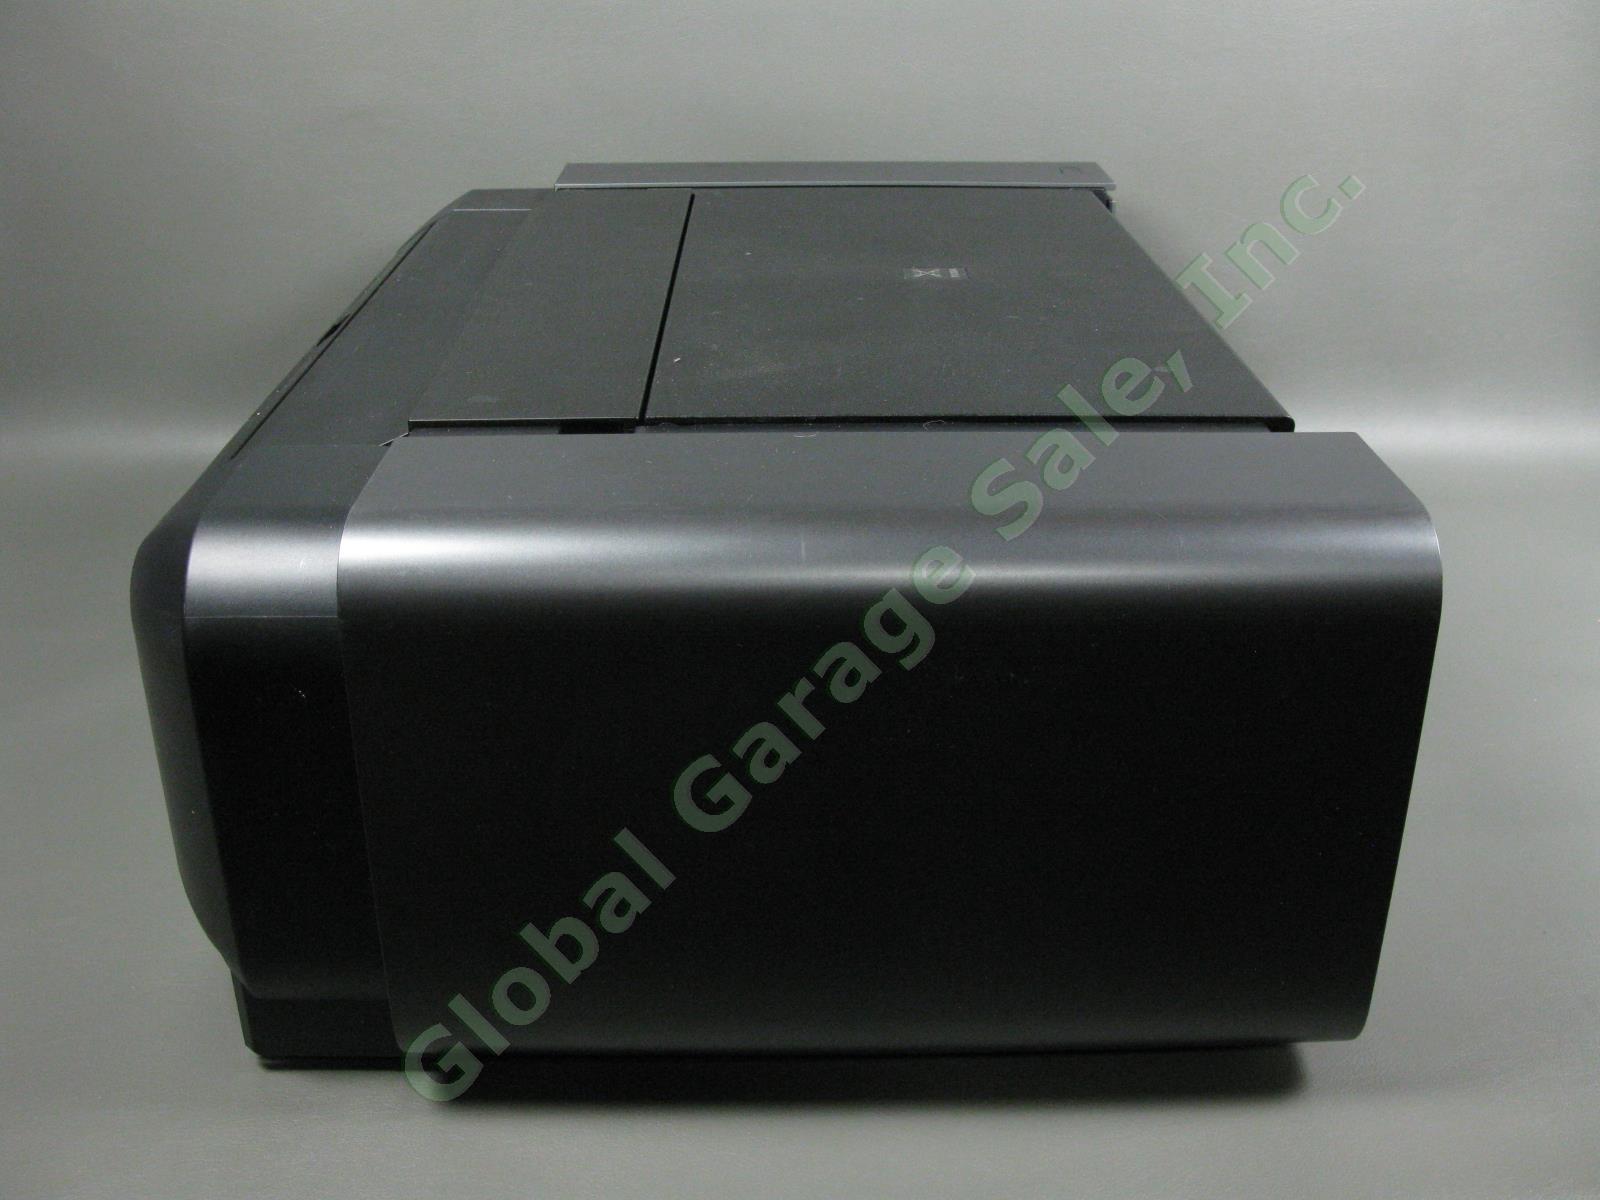 Canon PIXMA PRO-1 Digital Network Professional Photo Inkjet Printer Tested +Ink 20